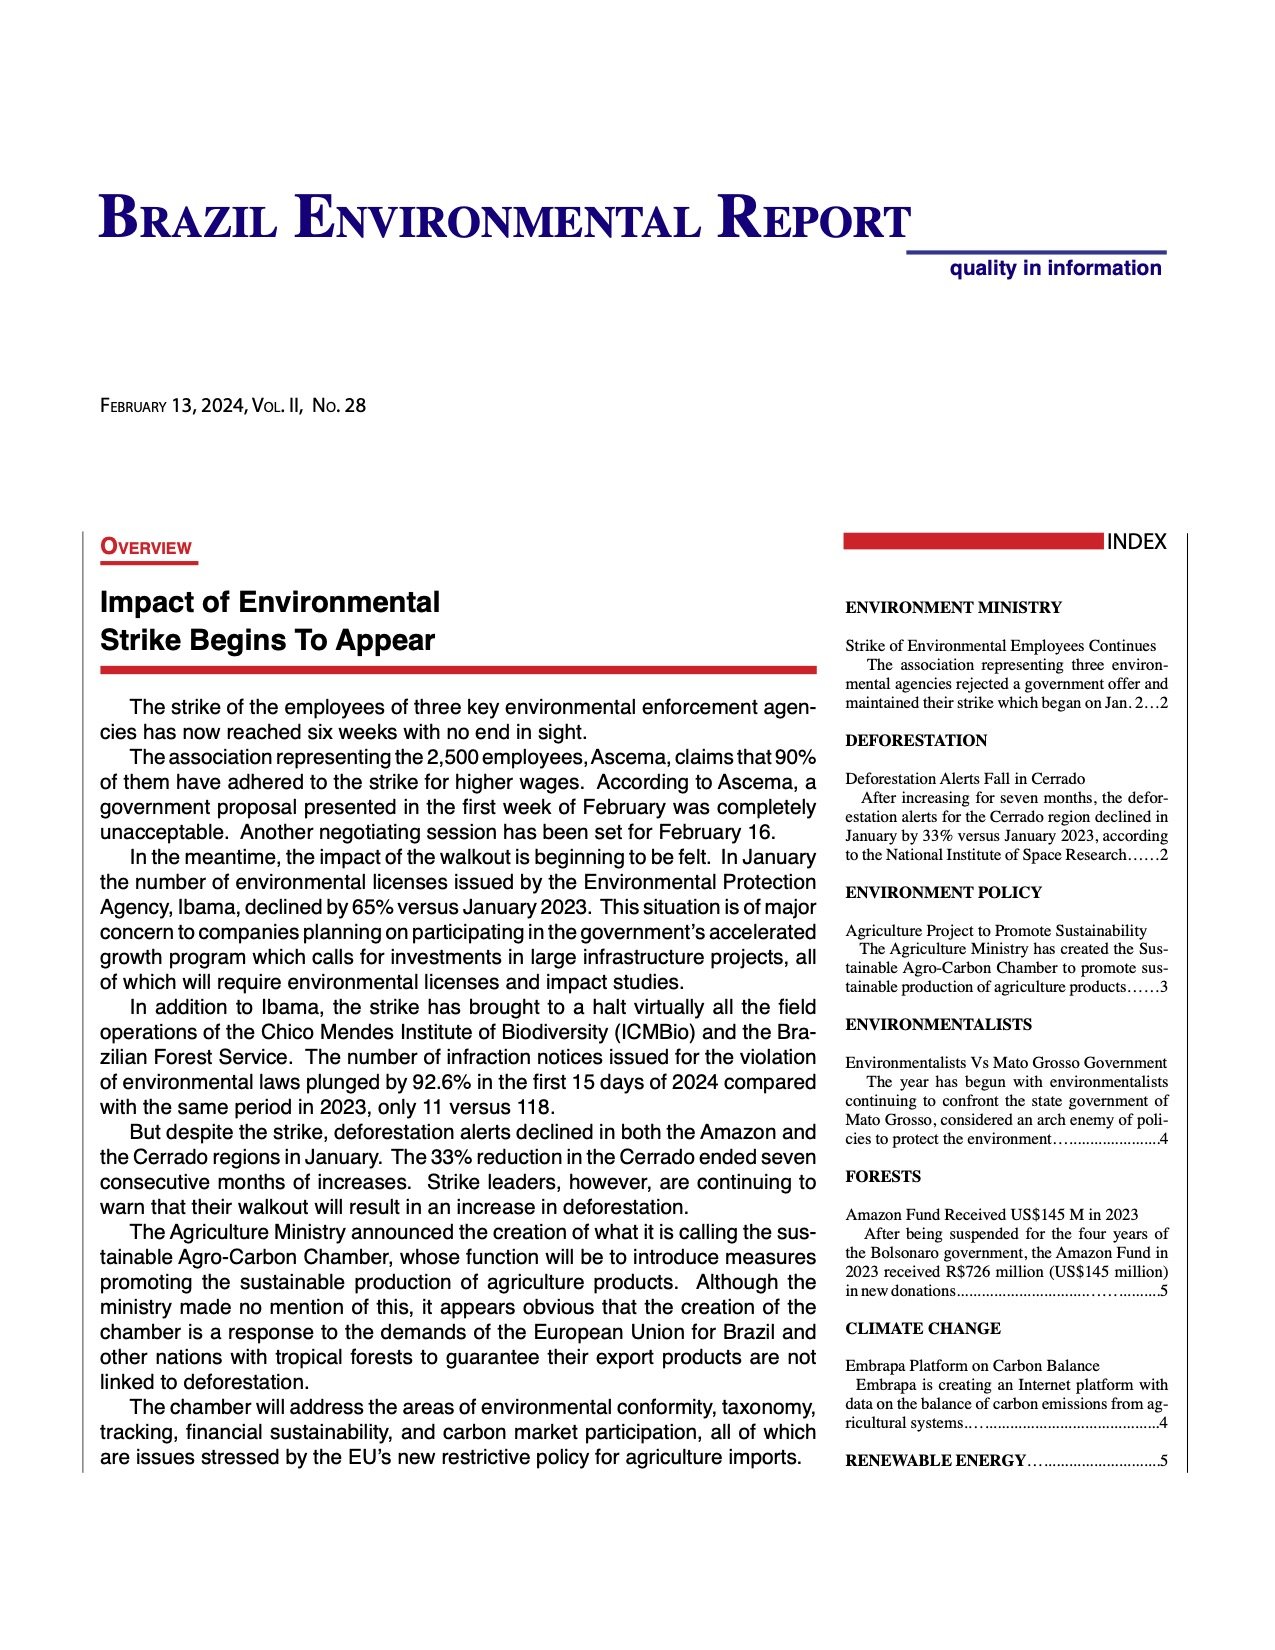 Environmental Report 28.jpg